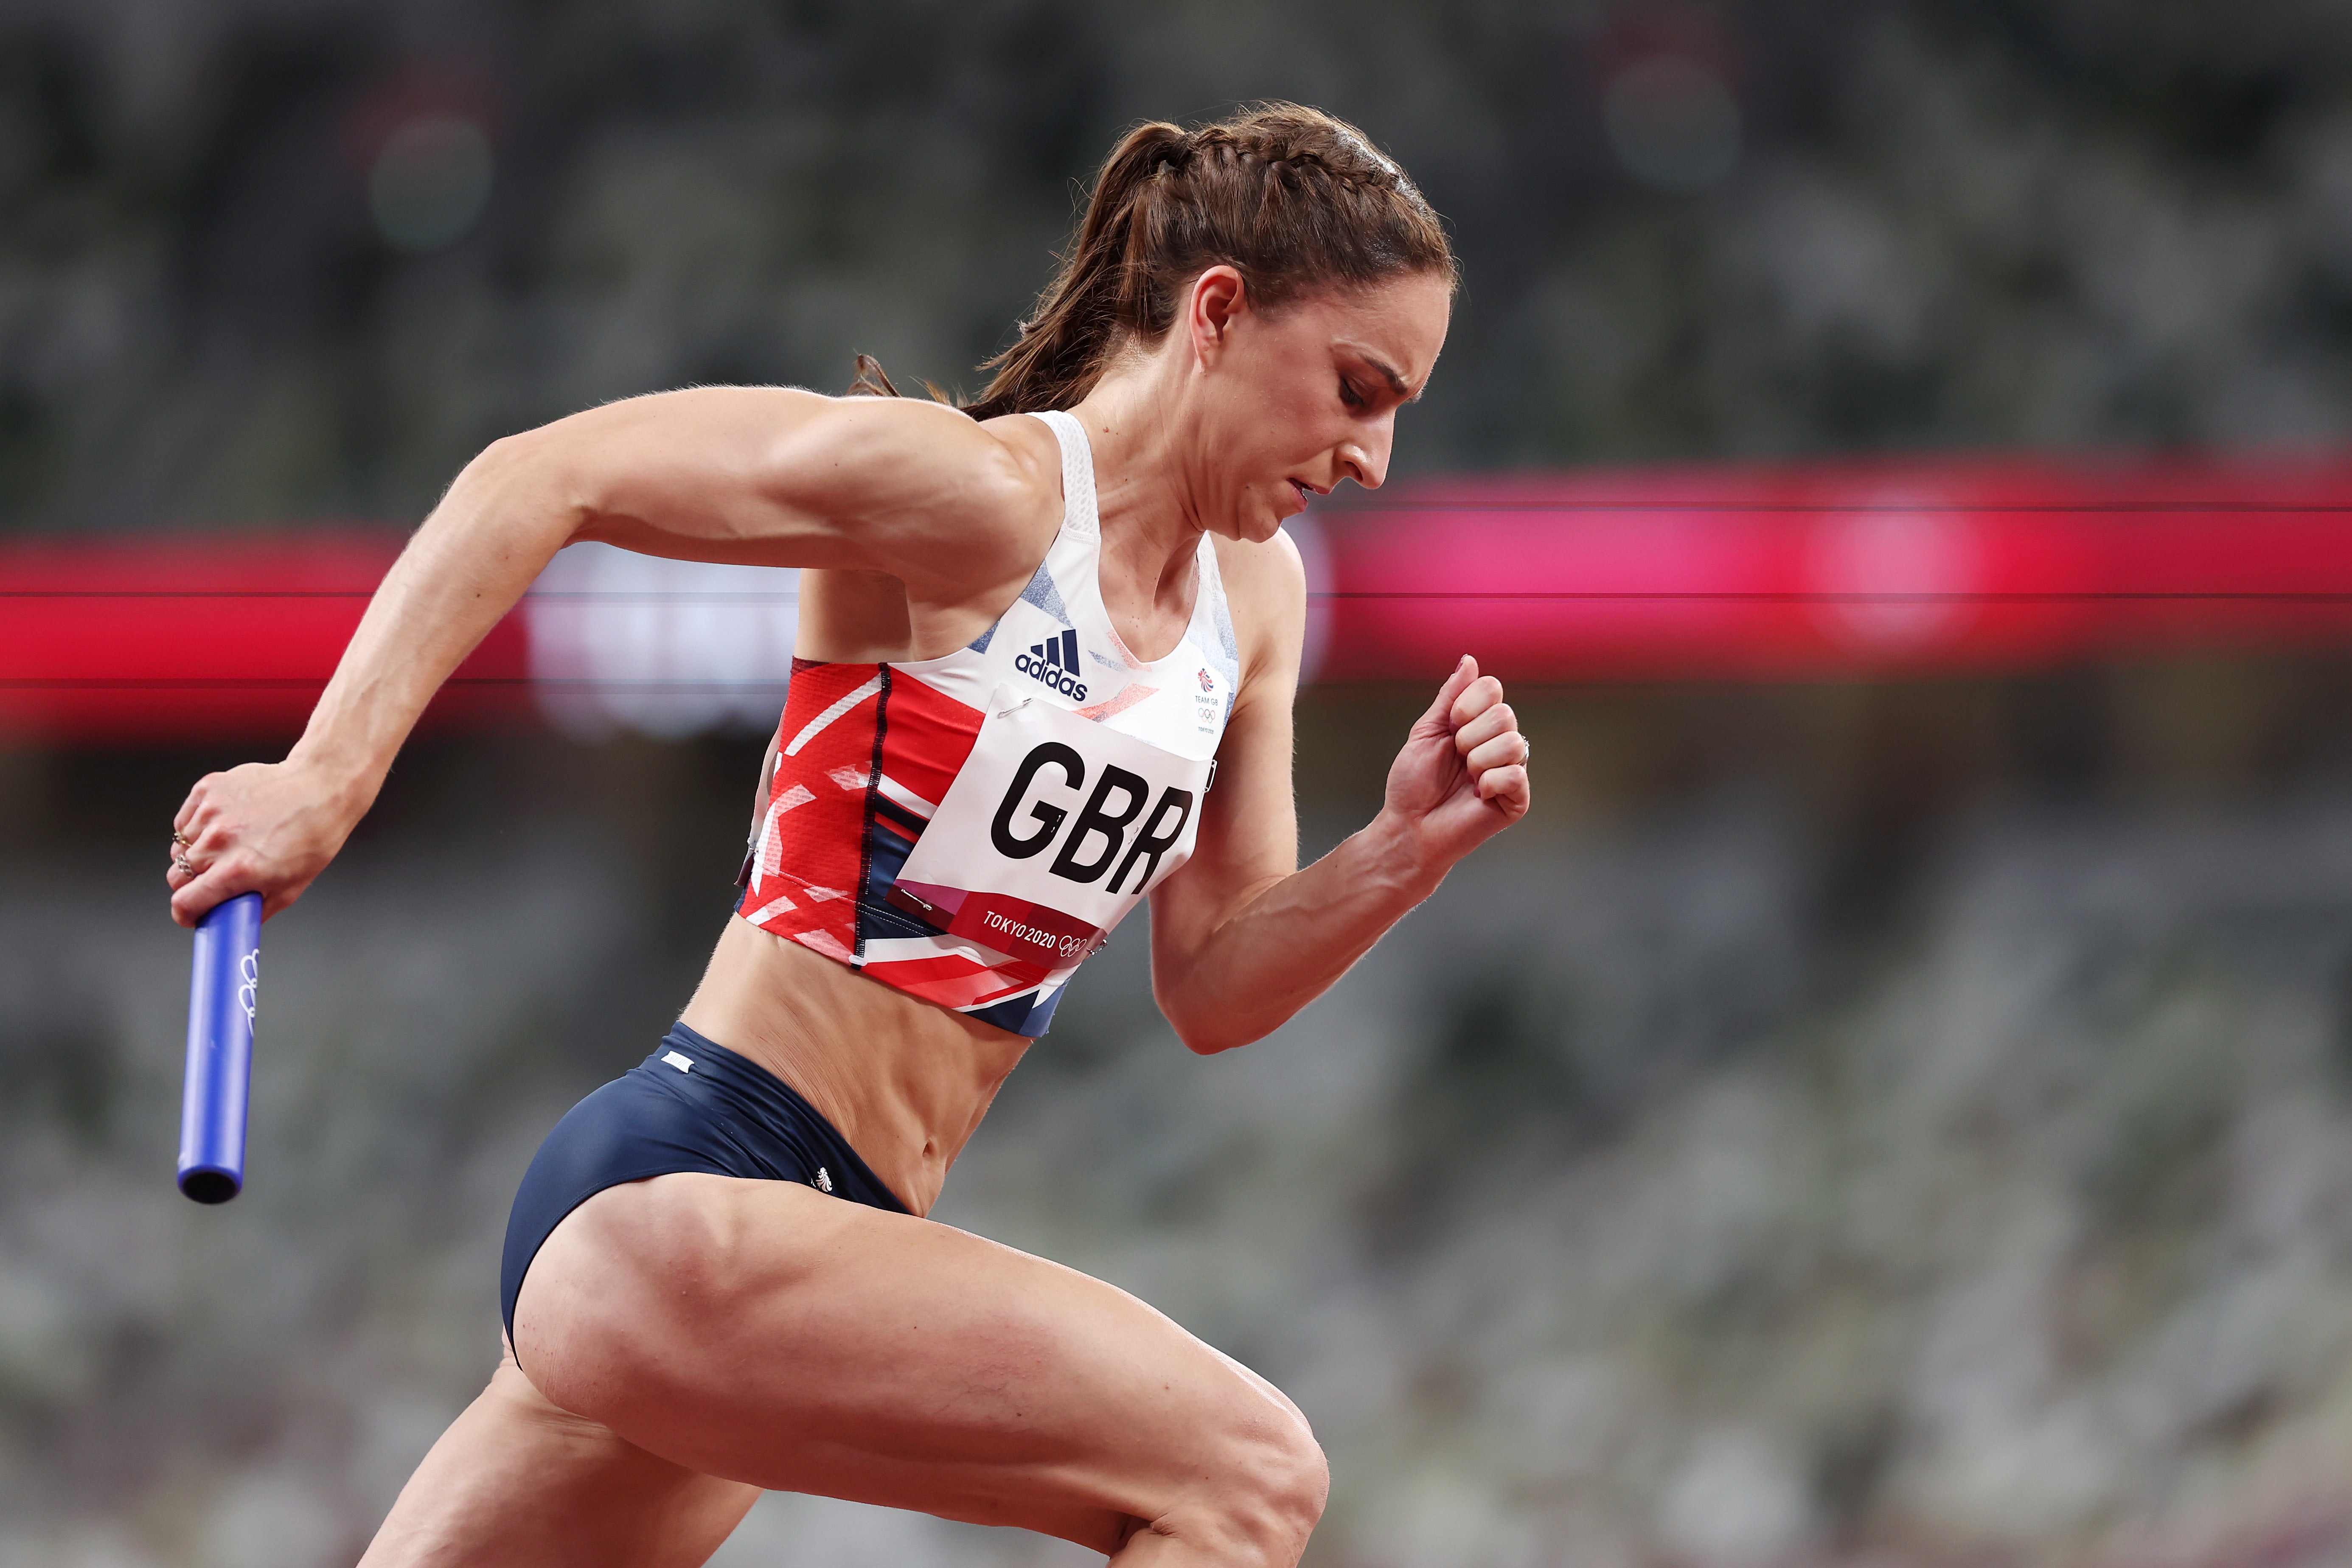 British runner Emily Diamond competing at the Tokyo Olympics